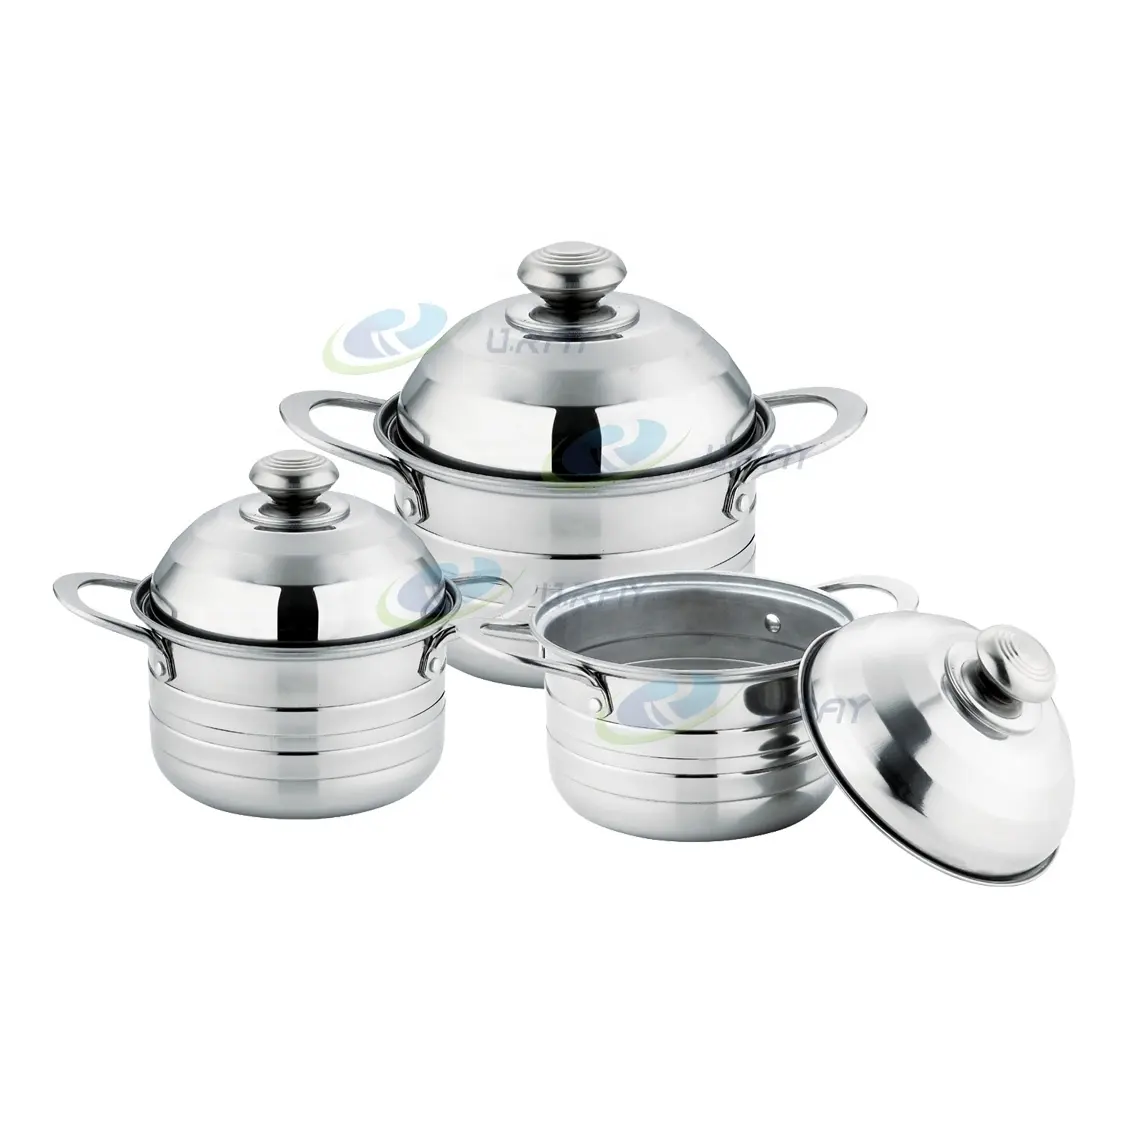 Hot selling stainless steel dish set professional 3pcs casserole-cookware-sets casseroles set pot